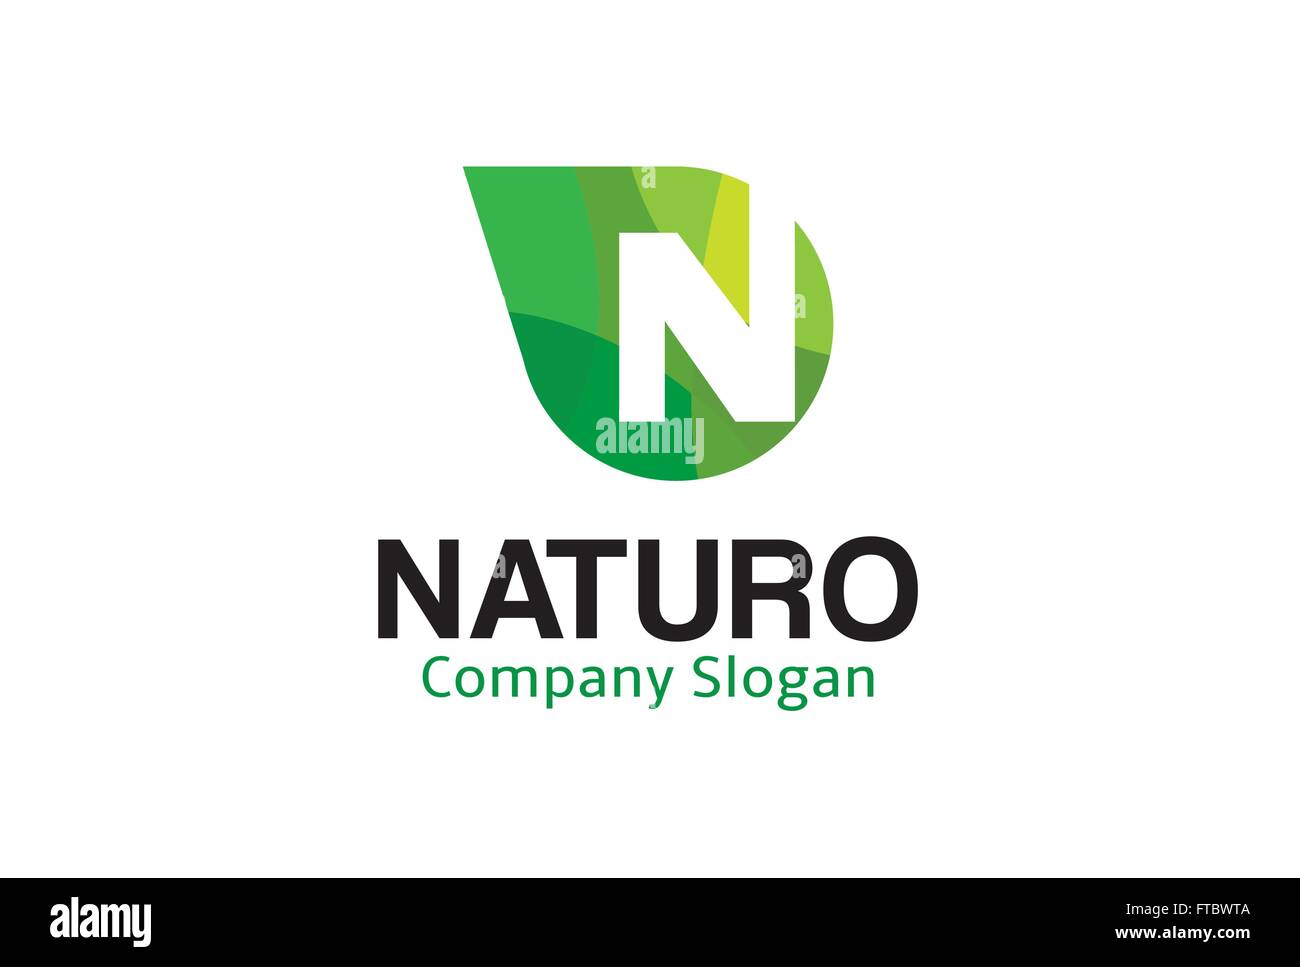 Naturo Design Illustration Stock Vector